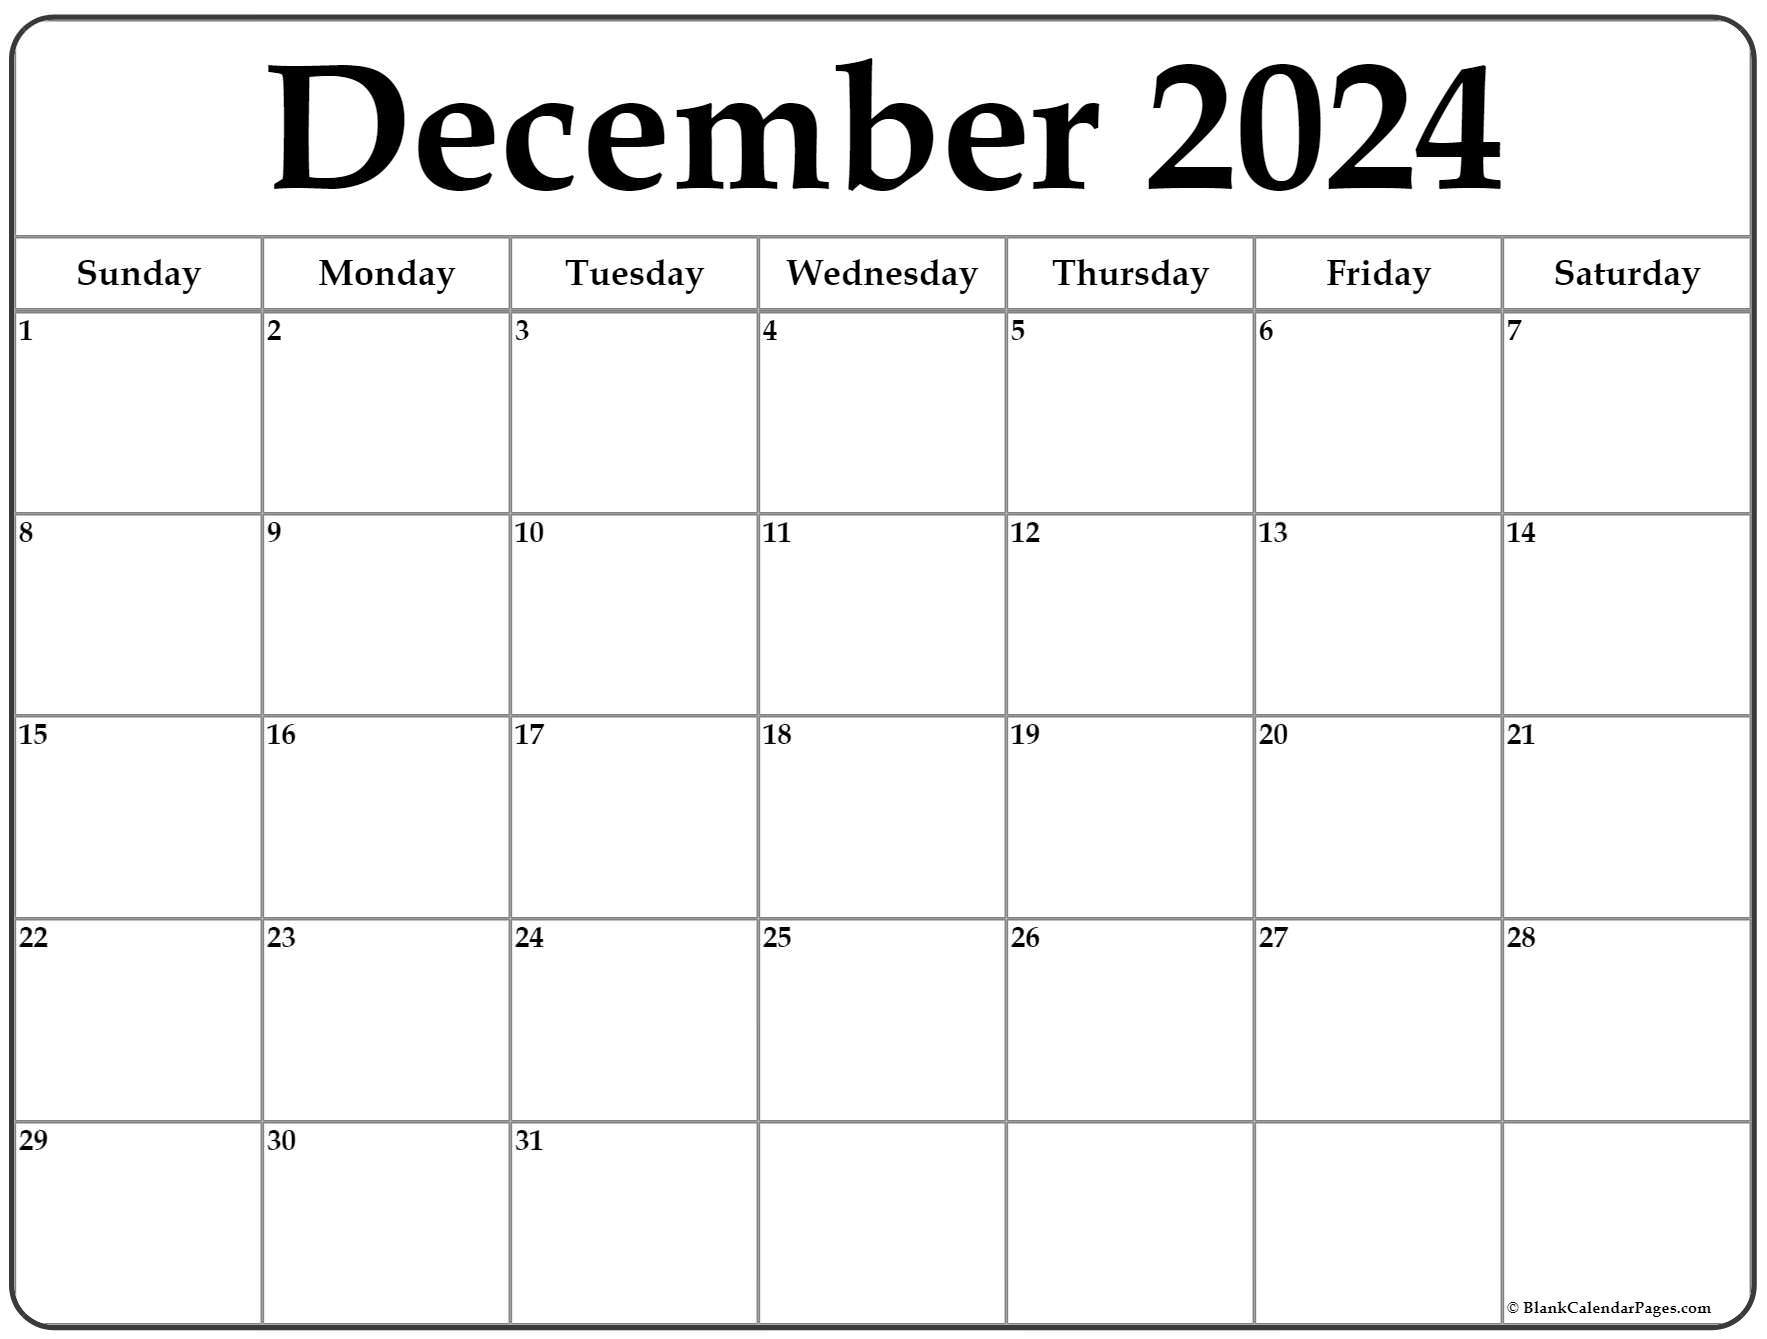 December 2024 calendar free printable calendar